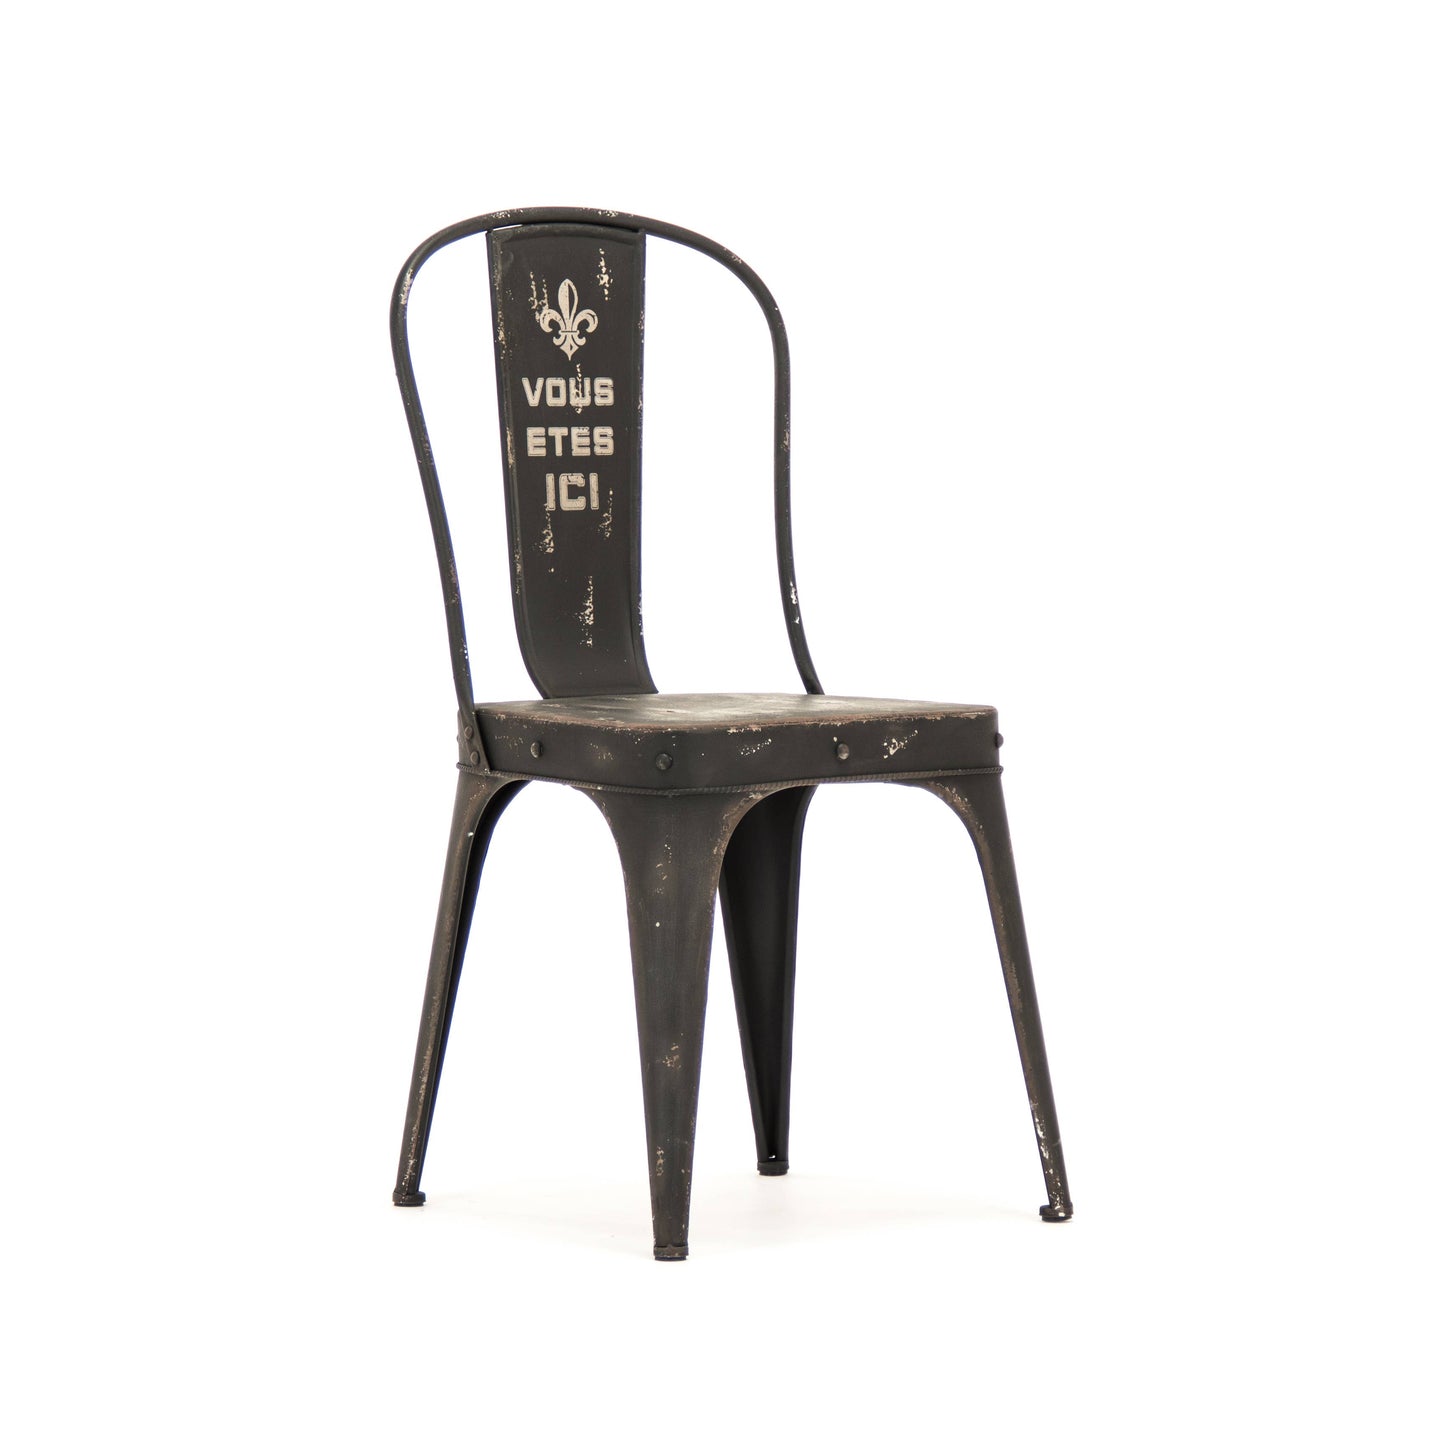 Christelle Iron Chair: Iron Antique Black